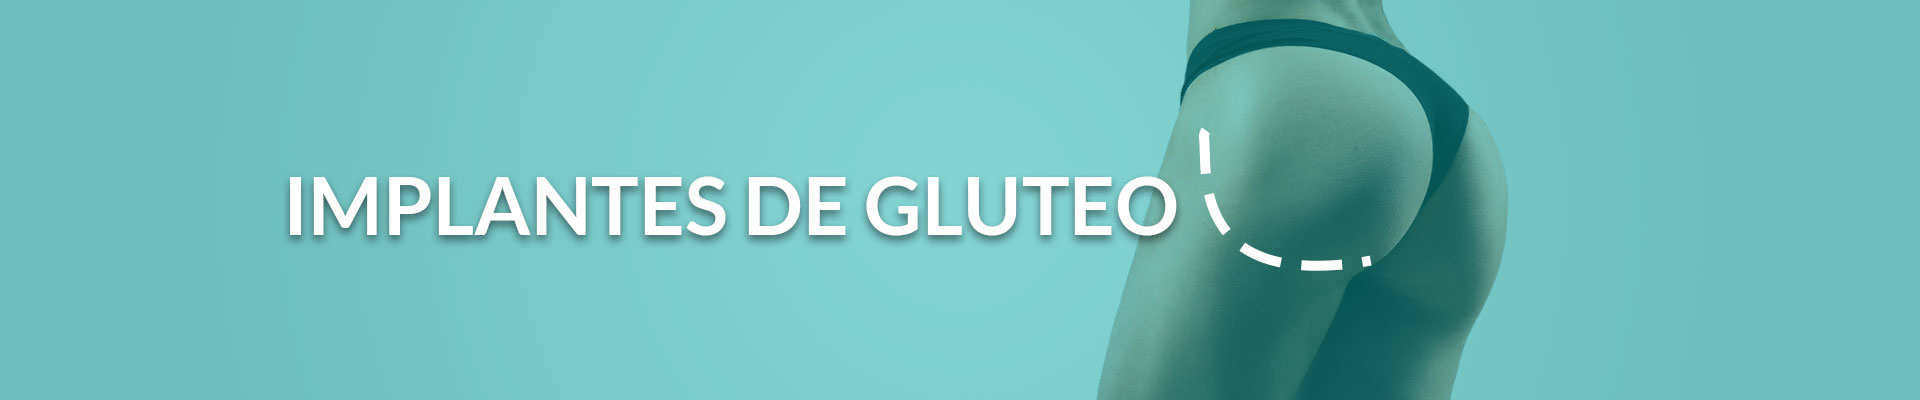 implantes de gluteos tjplast